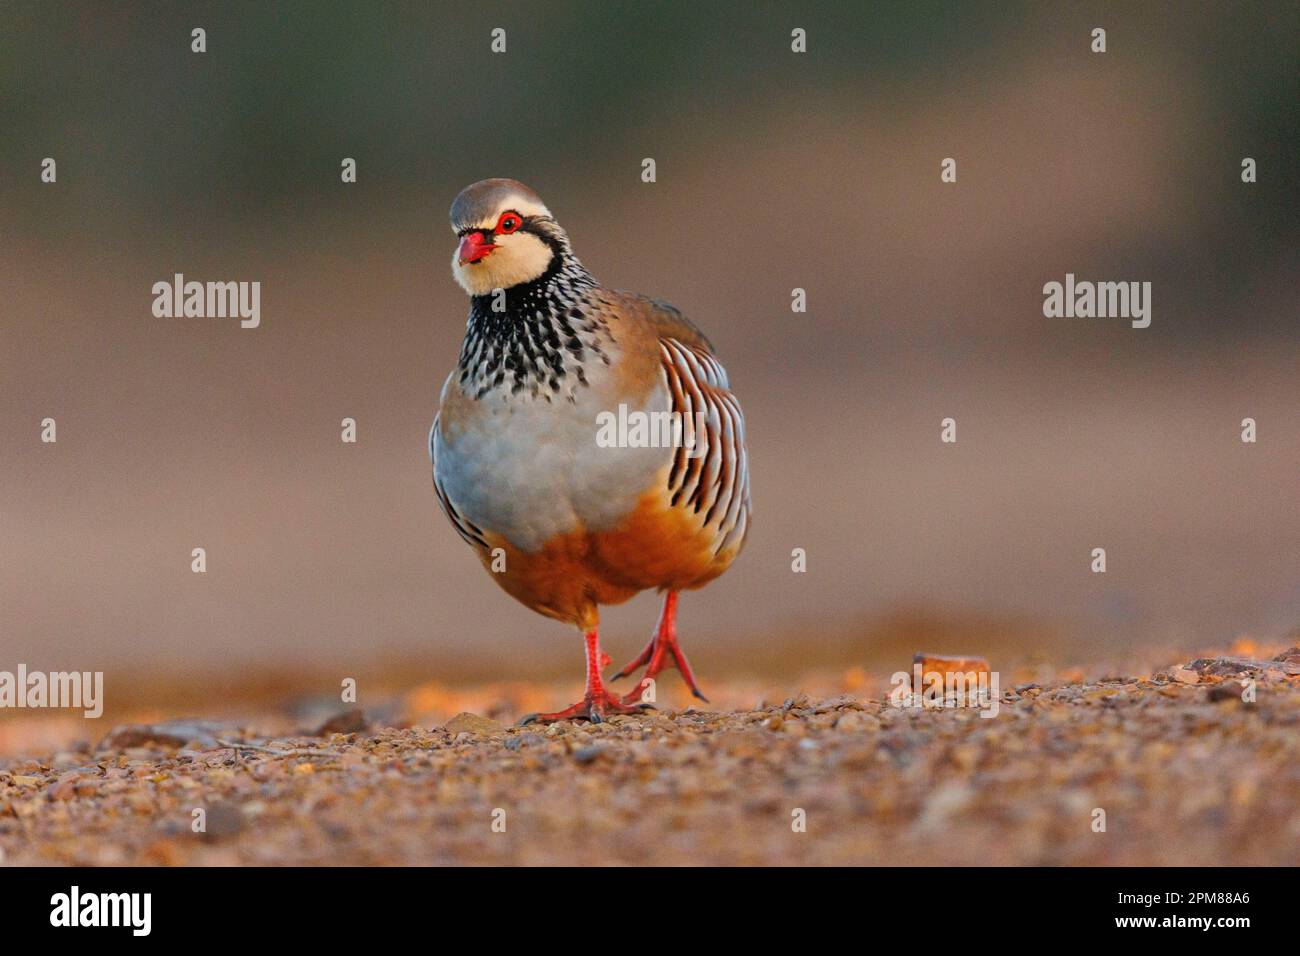 Spain, Castilla, Penalajo, Red Partridge (Alectoris rufa), on the ground Stock Photo